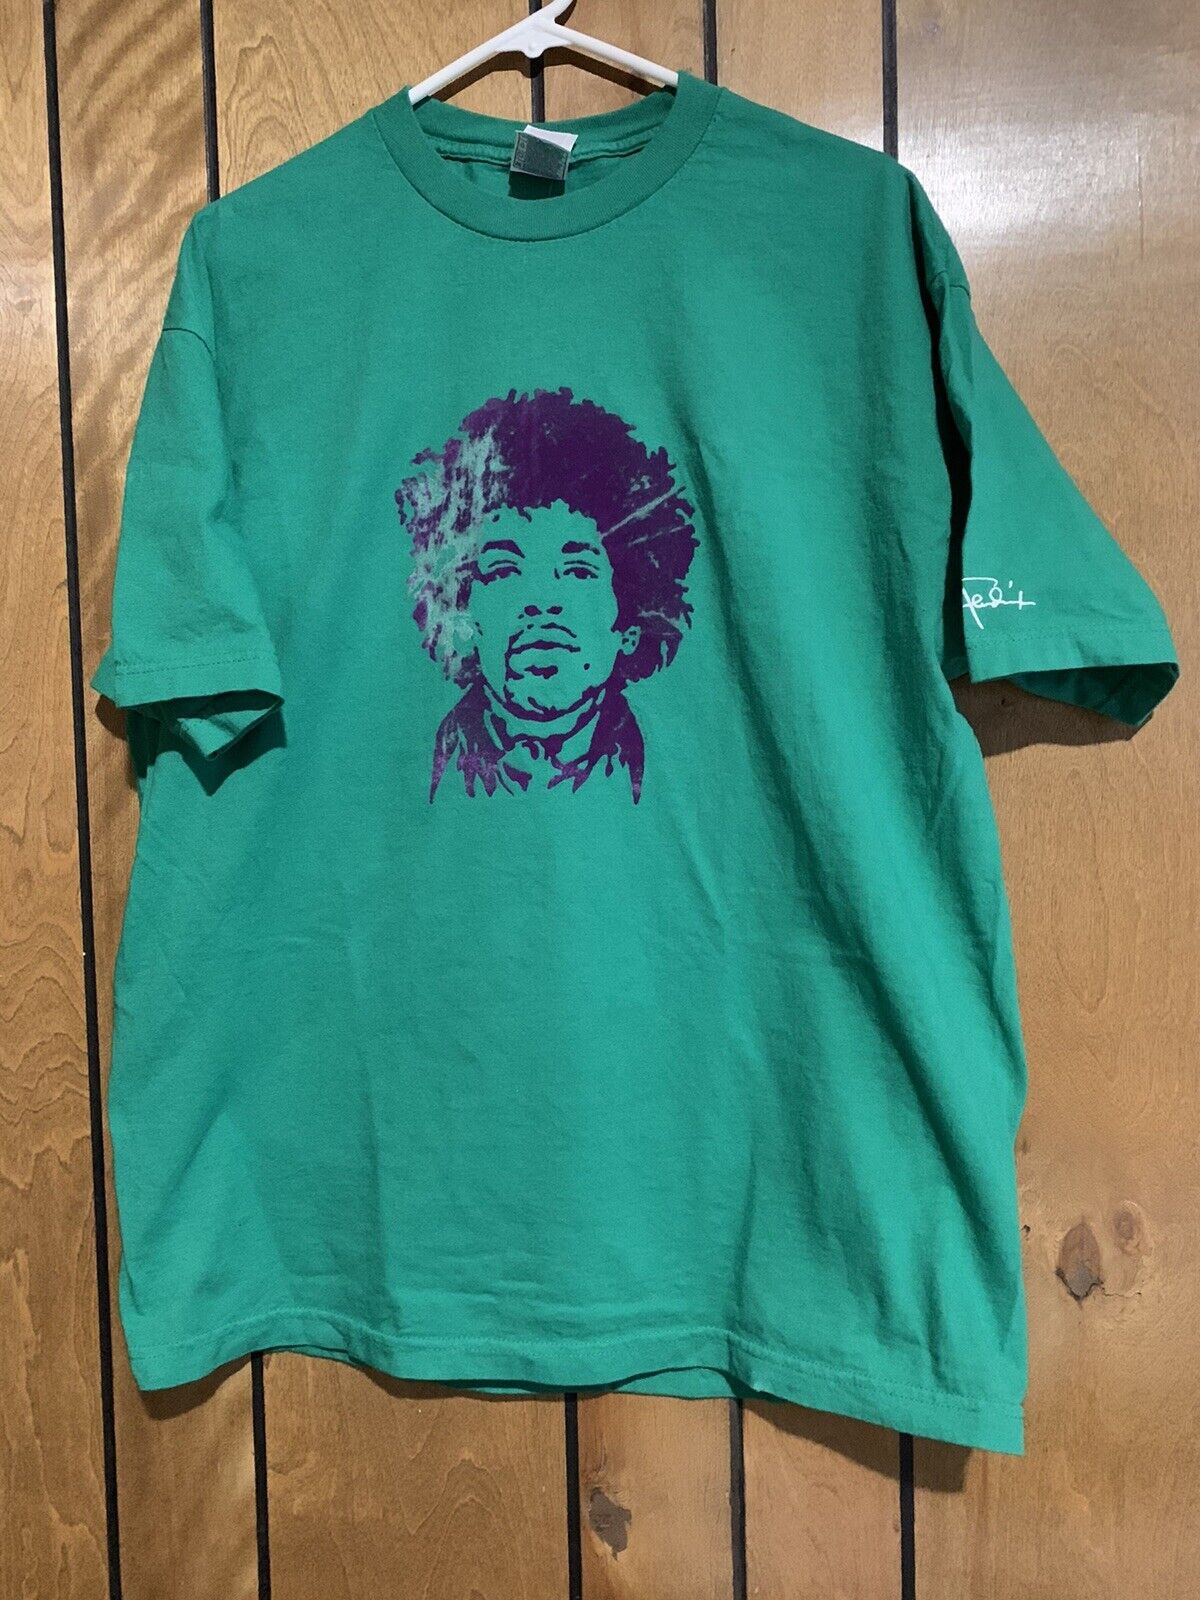 Vintage Jimmi Hendrix Shirt - image 1